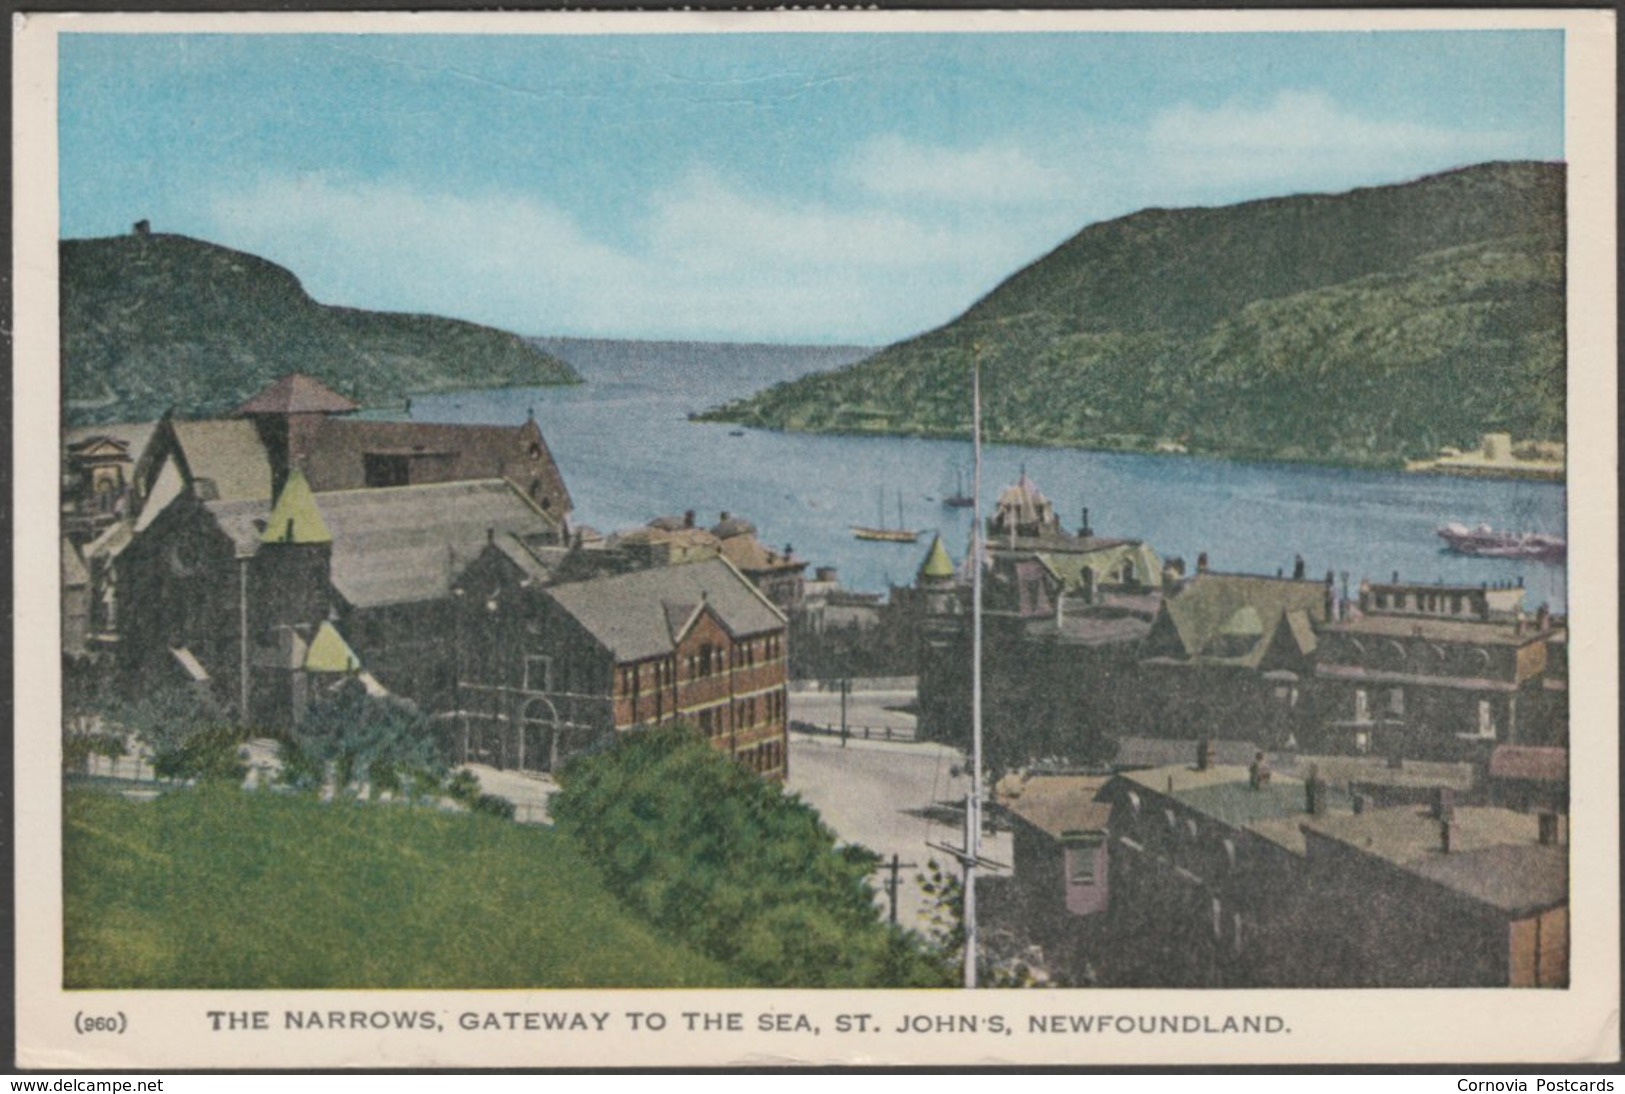 The Narrows, Gateway To The Sea, St John's, Newfoundland, 1954 - Postcard - St. John's